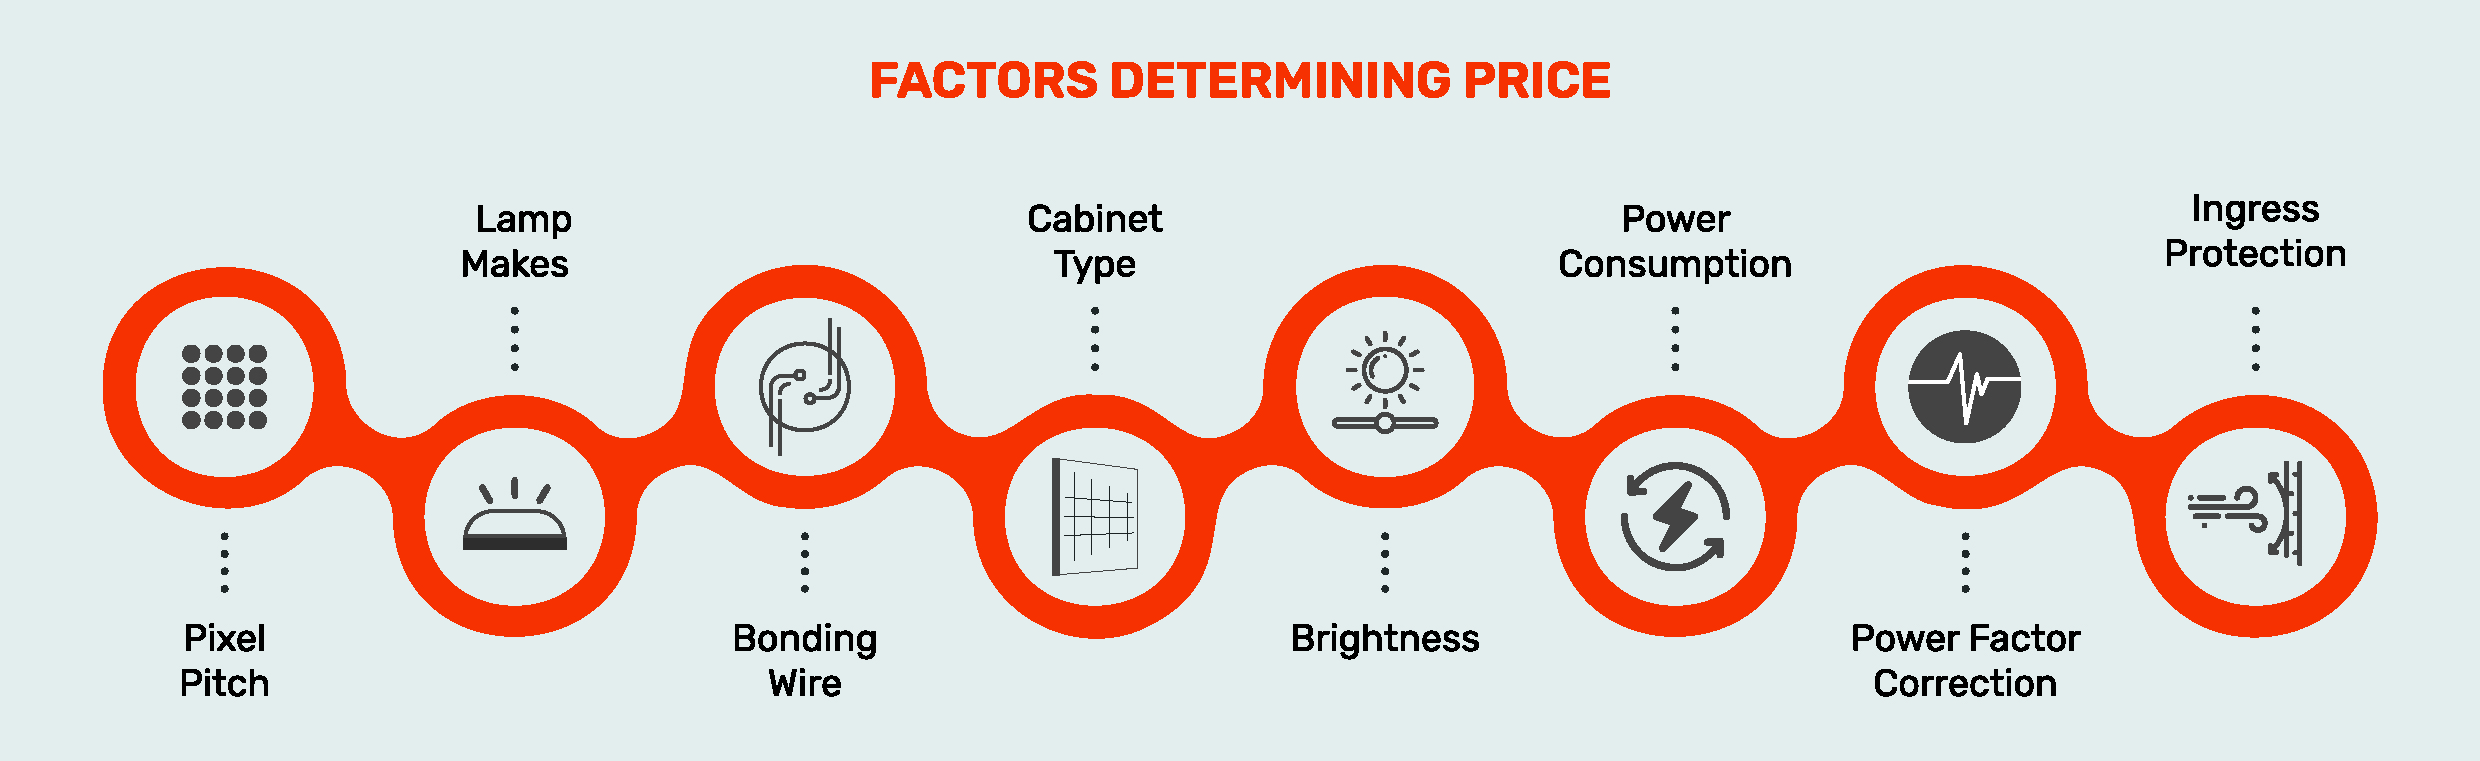 Factors determining price layout